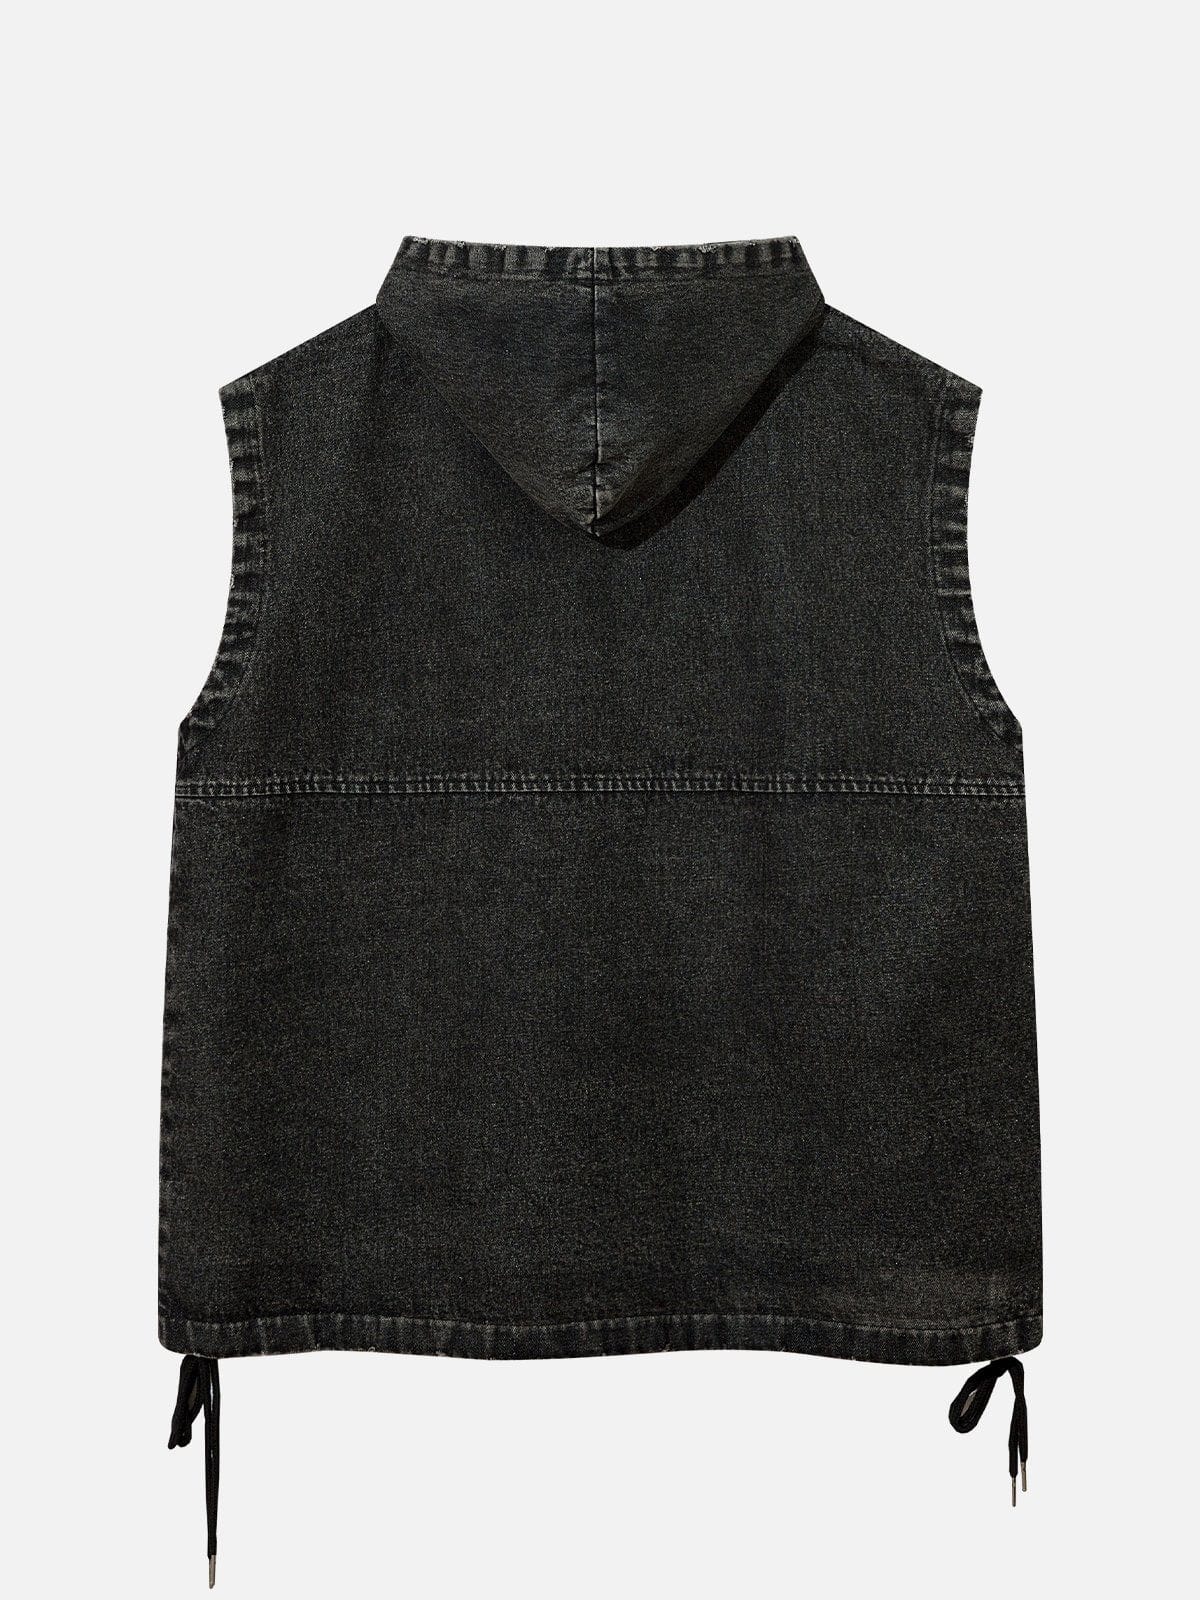 NEV Washed Applique Embroidery Vest